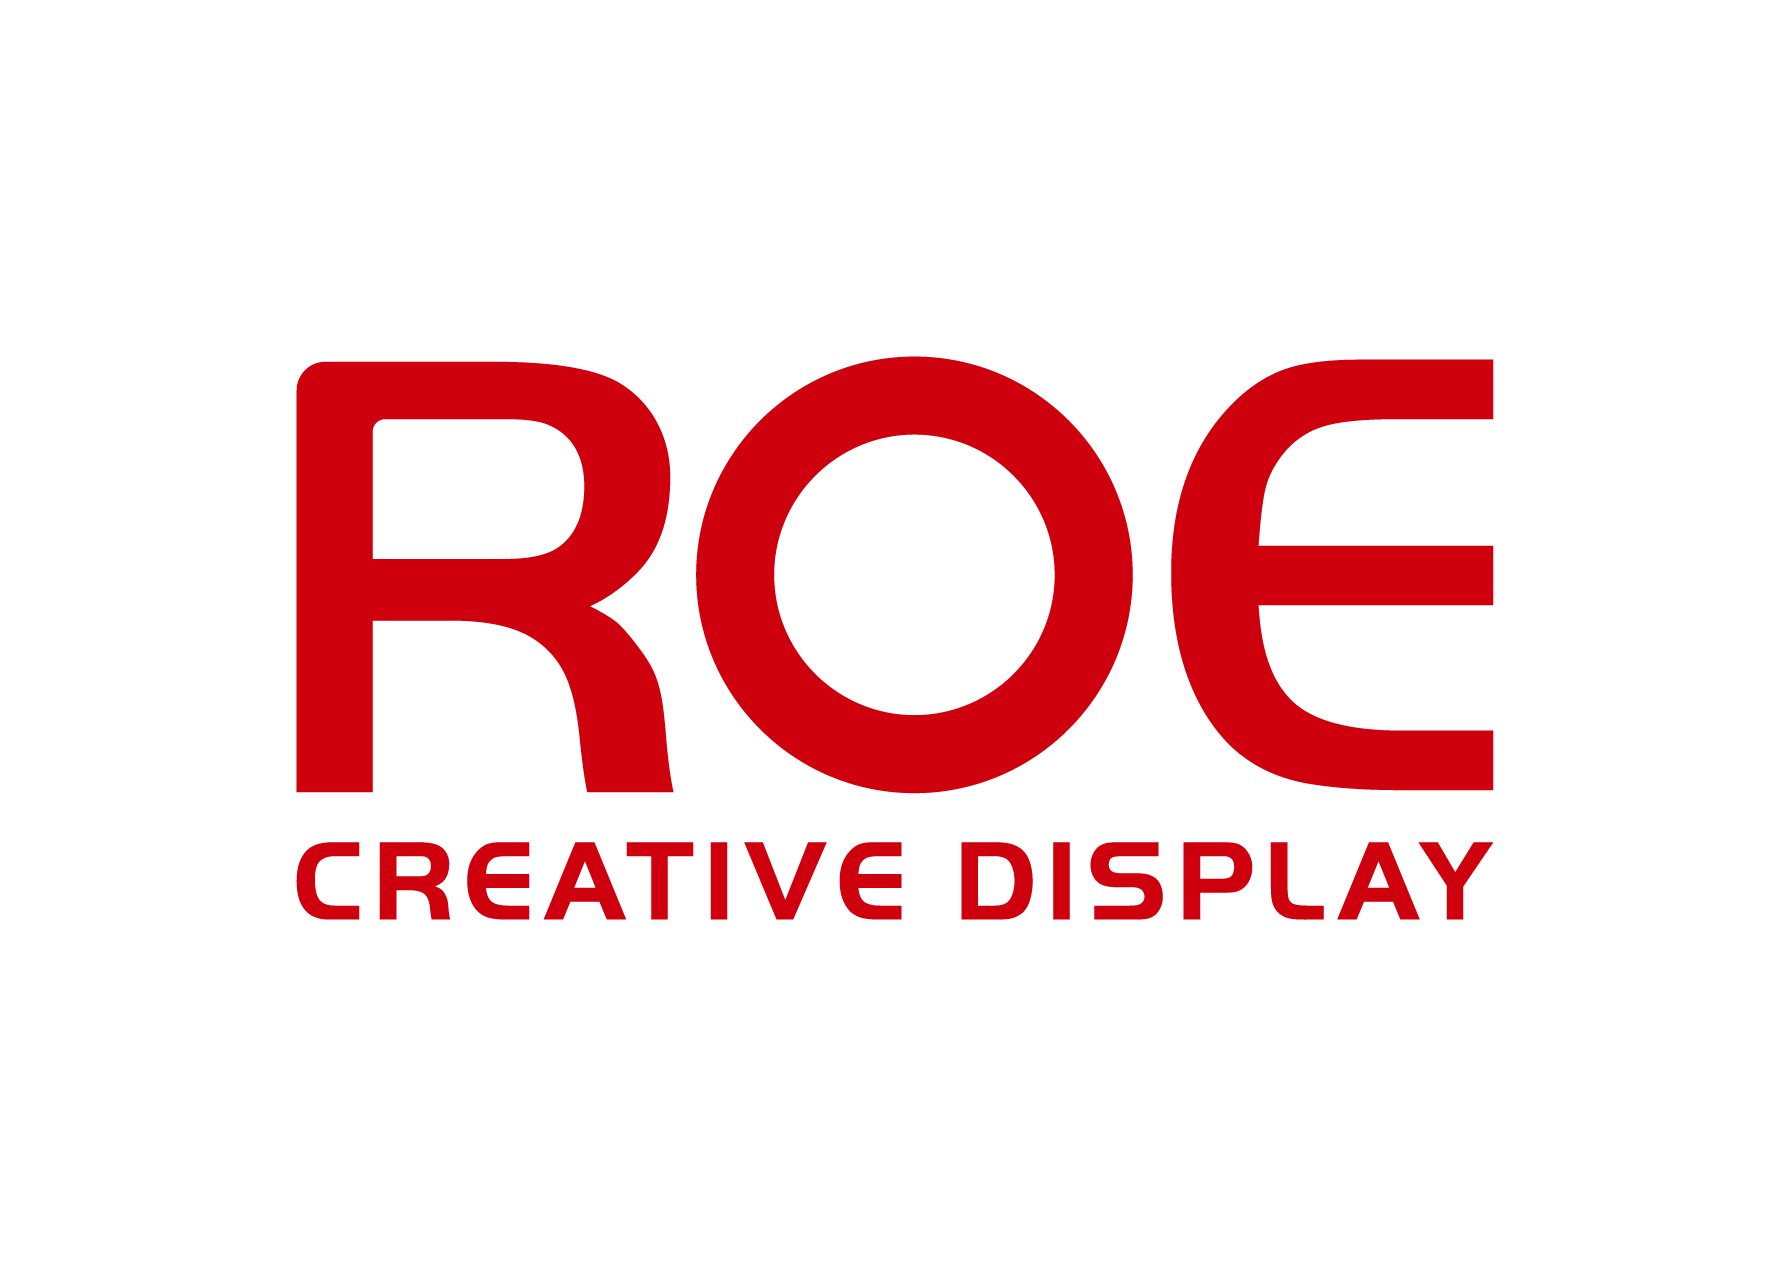 Roe logo. Логотип Роэ. Дисплей logo. Roe creativity display логотип PNG. Res company